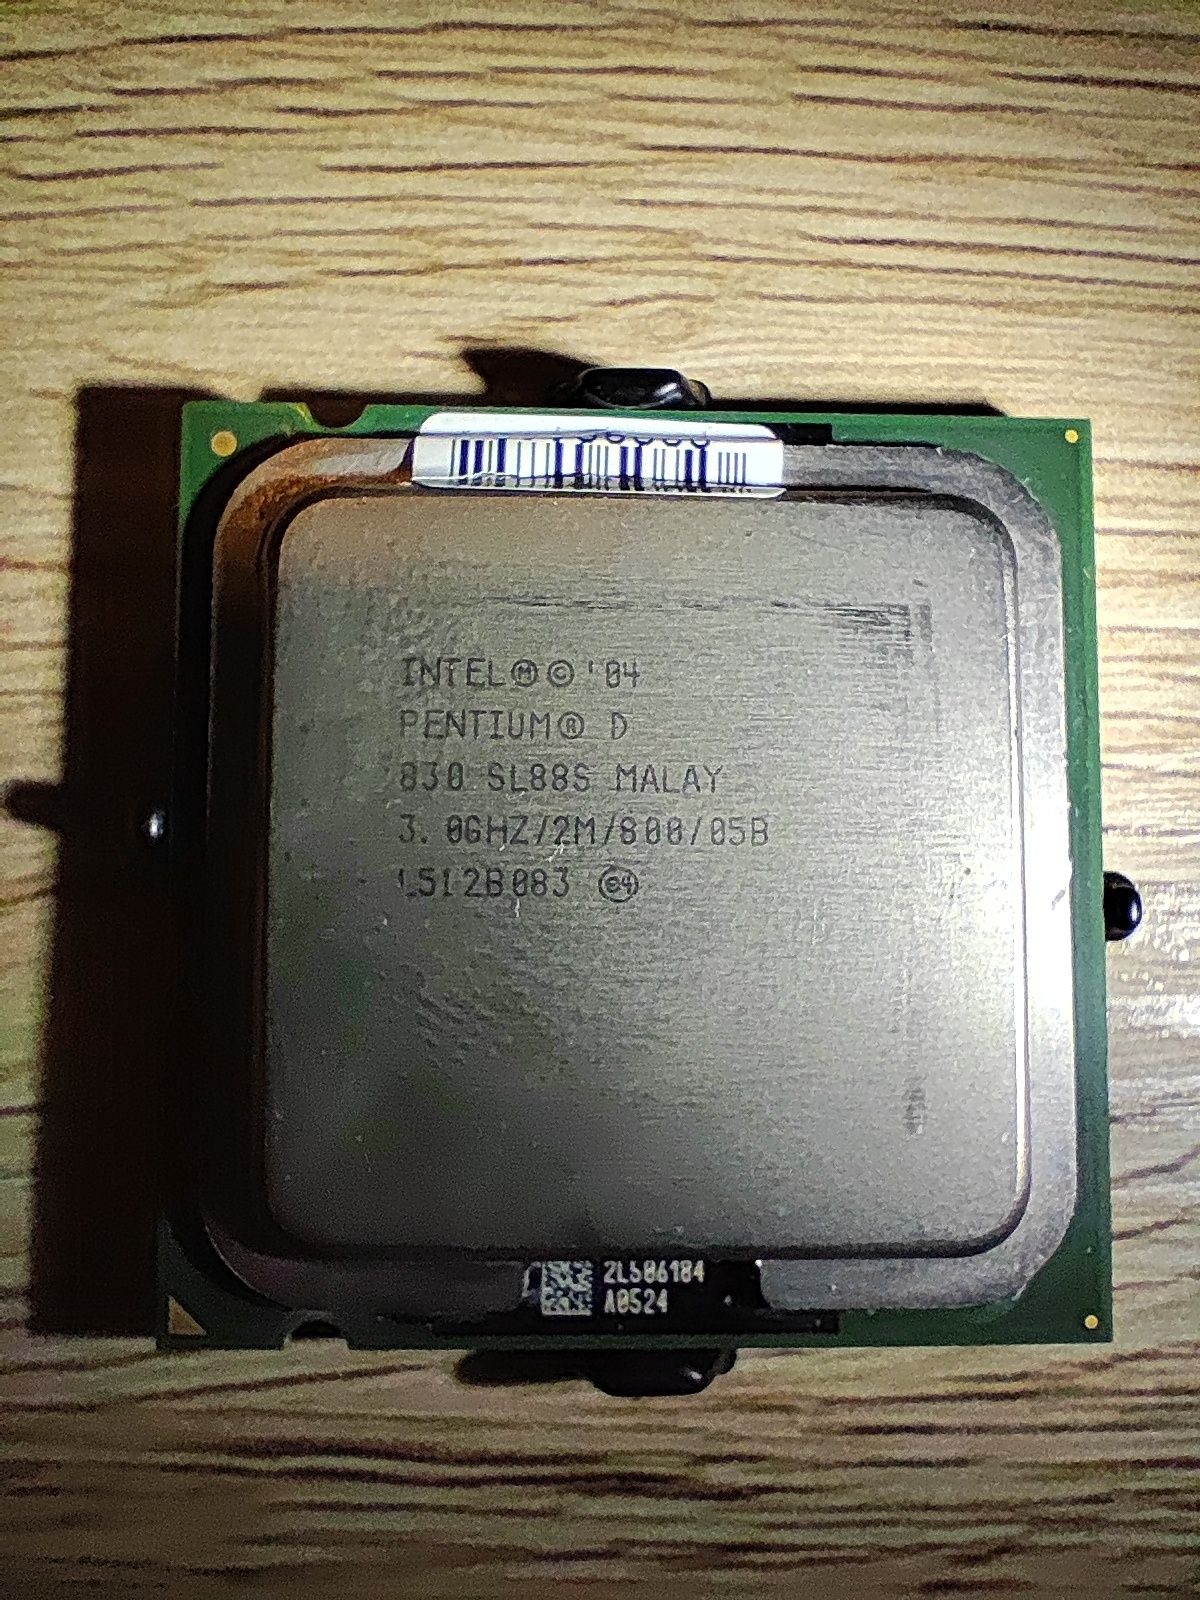 Procesor Intel Pentium D 830 + wentylator Intel E33681